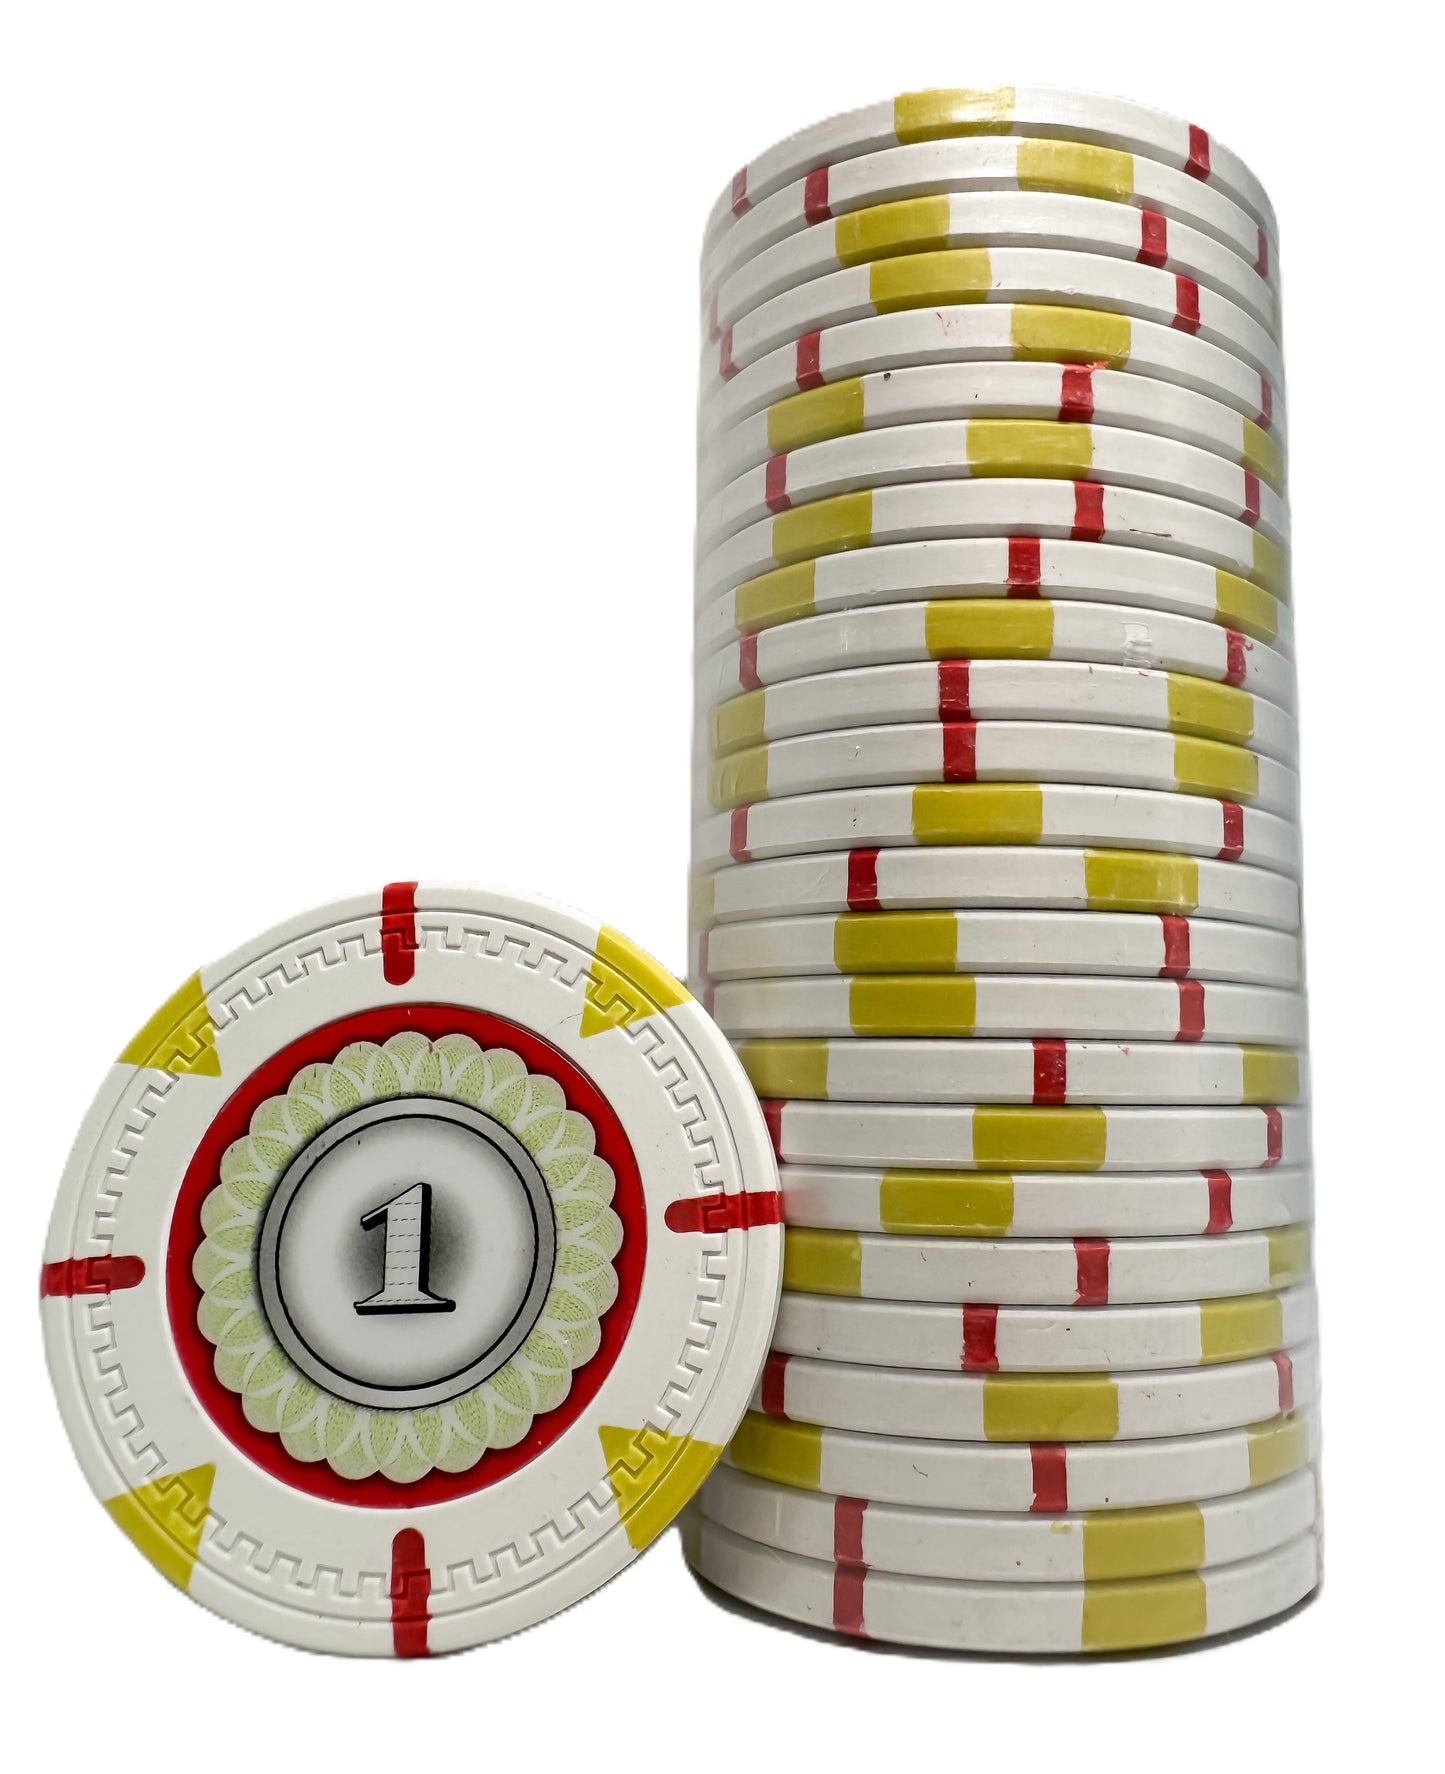 Triangle and Stick Poker Sets